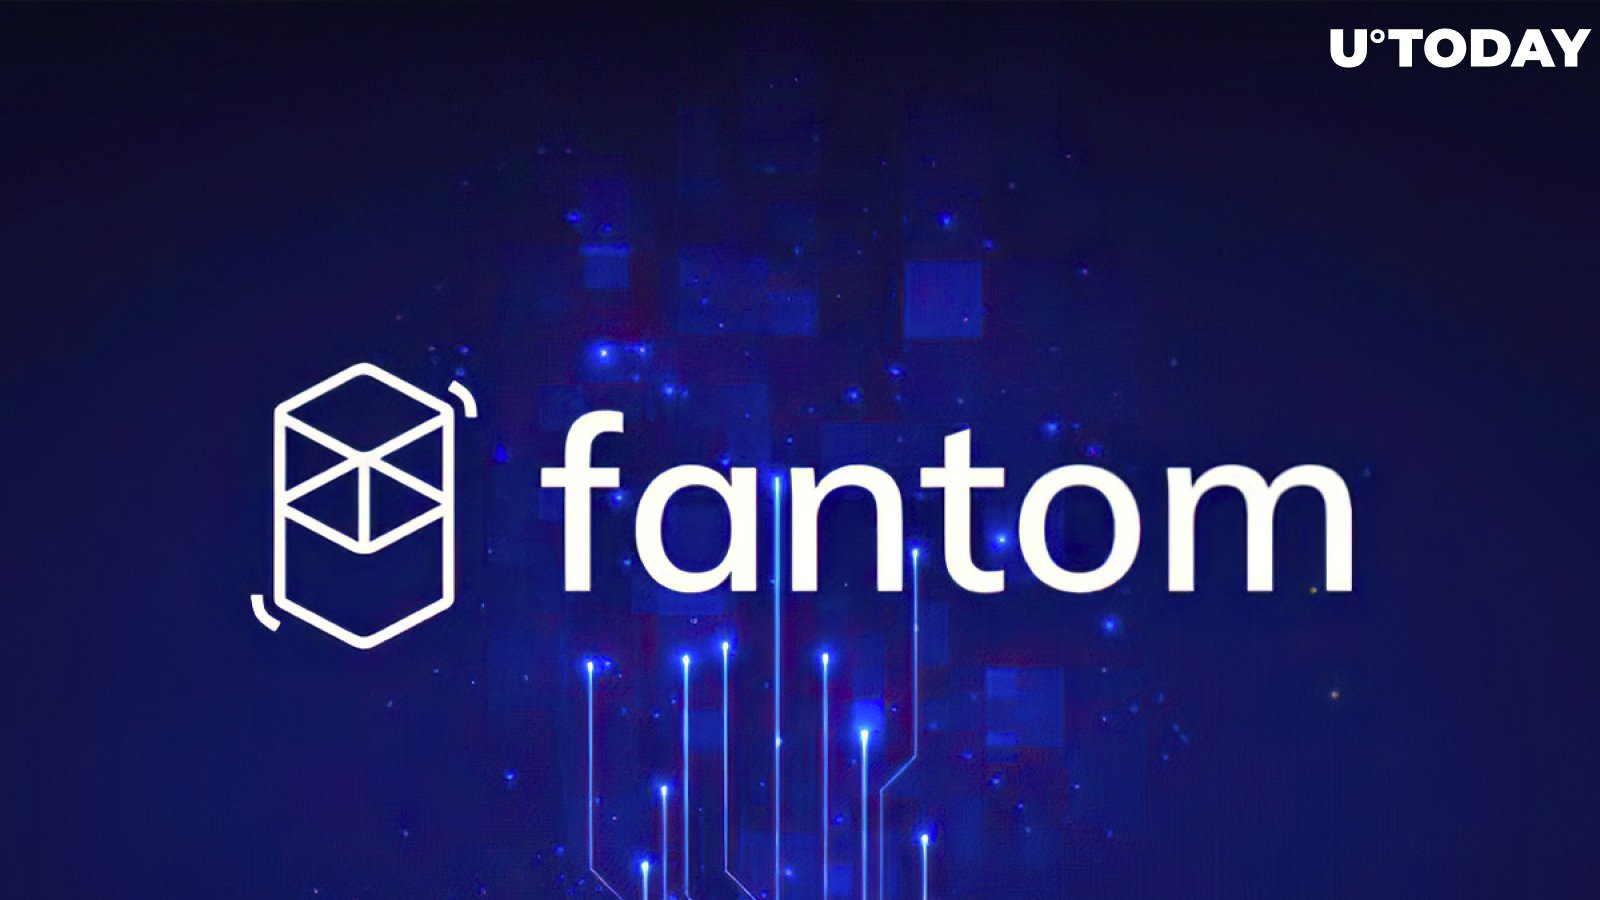 Community Drives Exceptional Growth on Fantom DeFi